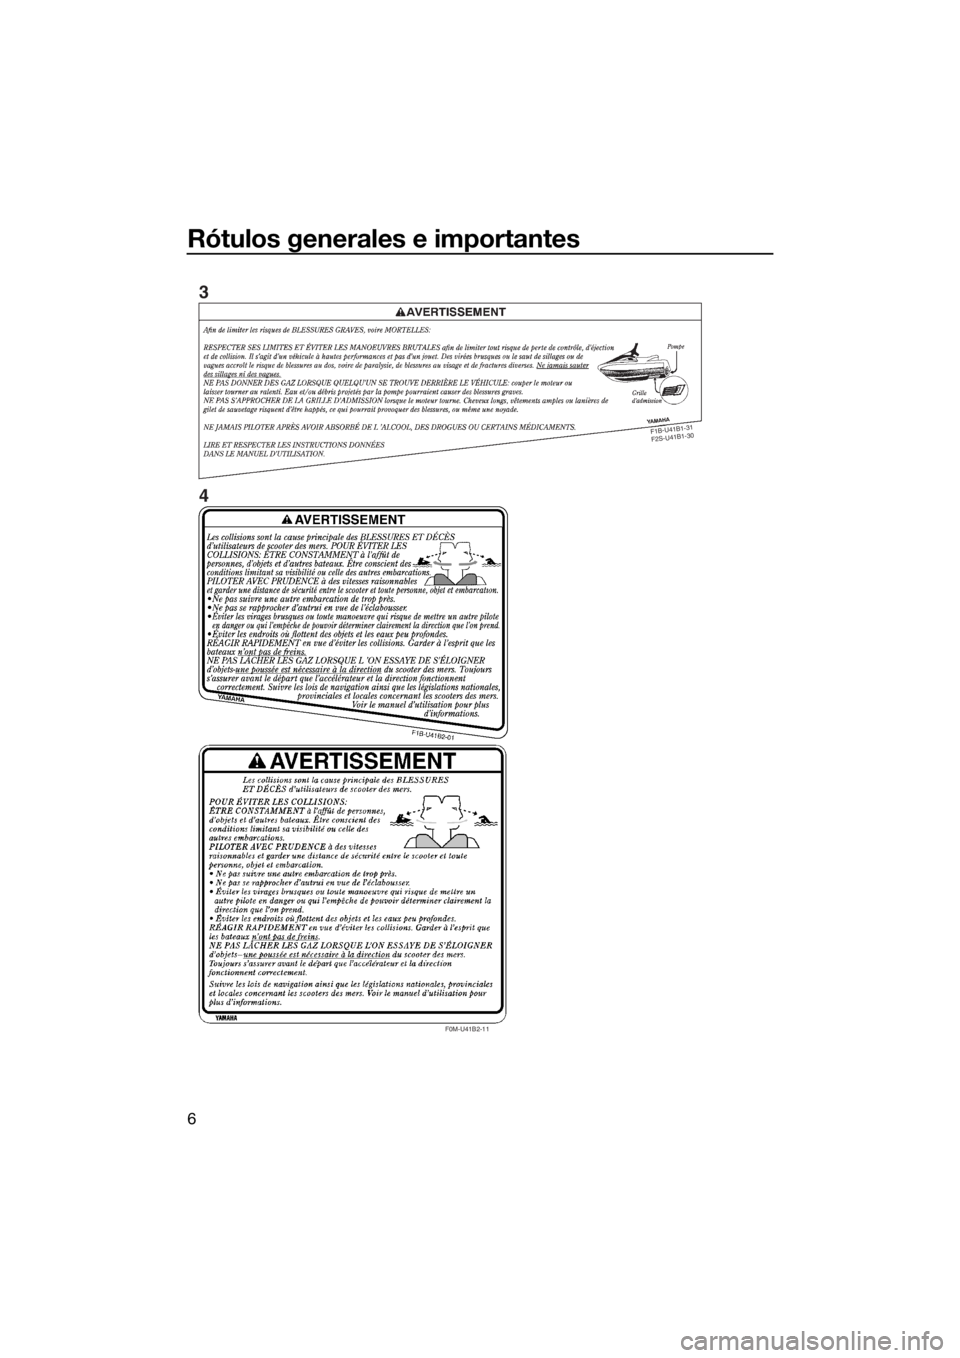 YAMAHA FX HO CRUISER 2015  Manuale de Empleo (in Spanish) Rótulos generales e importantes
6
F
1
B
-U
41
B
1-3
1
 
F
2
S
-U
4
1
B
1-3
0
F0M-U41B2-11
3
4
UF2T74S0.book  Page 6  Thursday, June 26, 2014  9:14 AM 